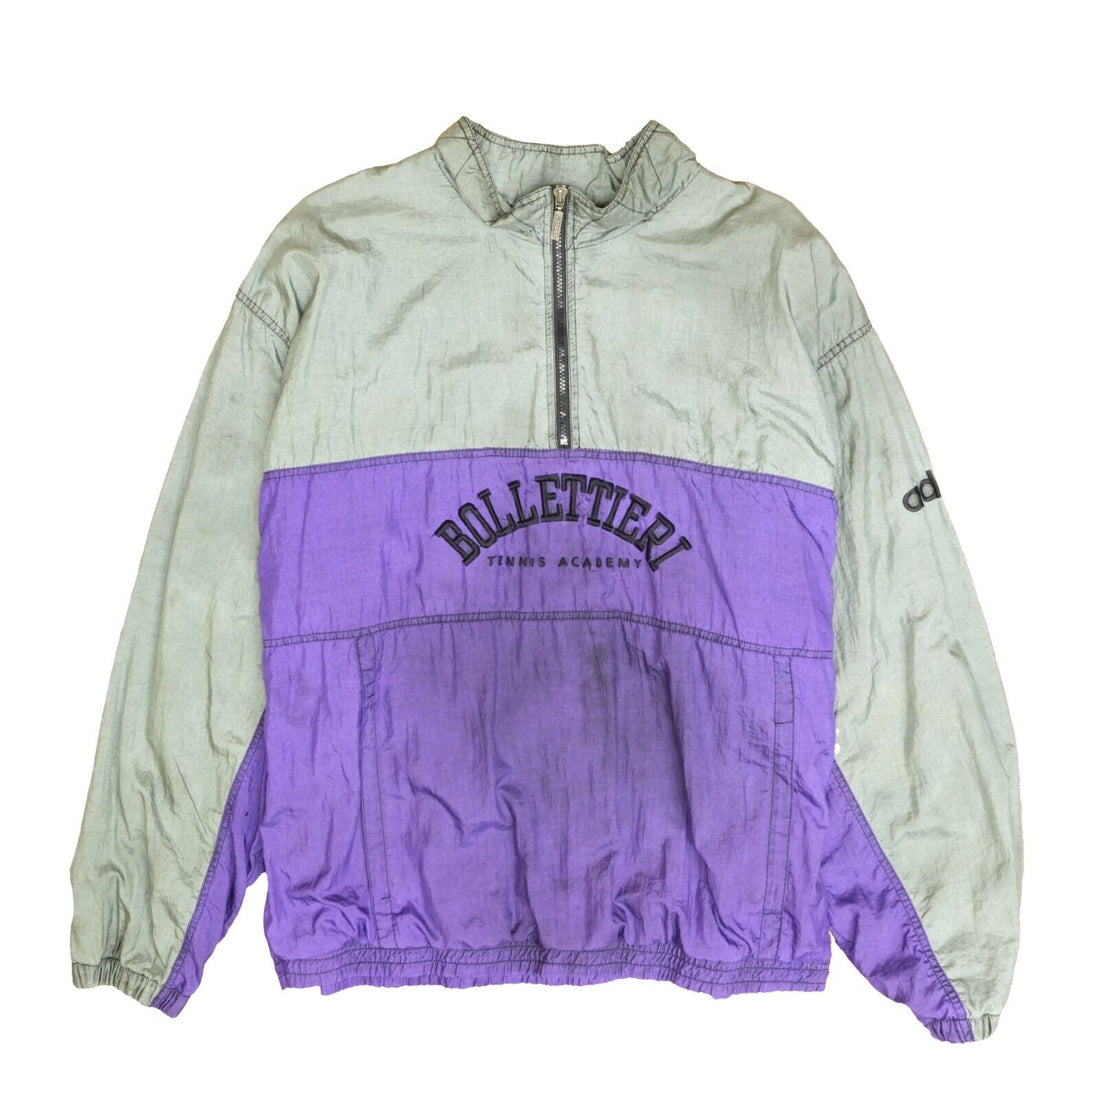 Vintage Adidas Bollettieri Anorak Windbreaker Jacket Size XL Purple Tennis